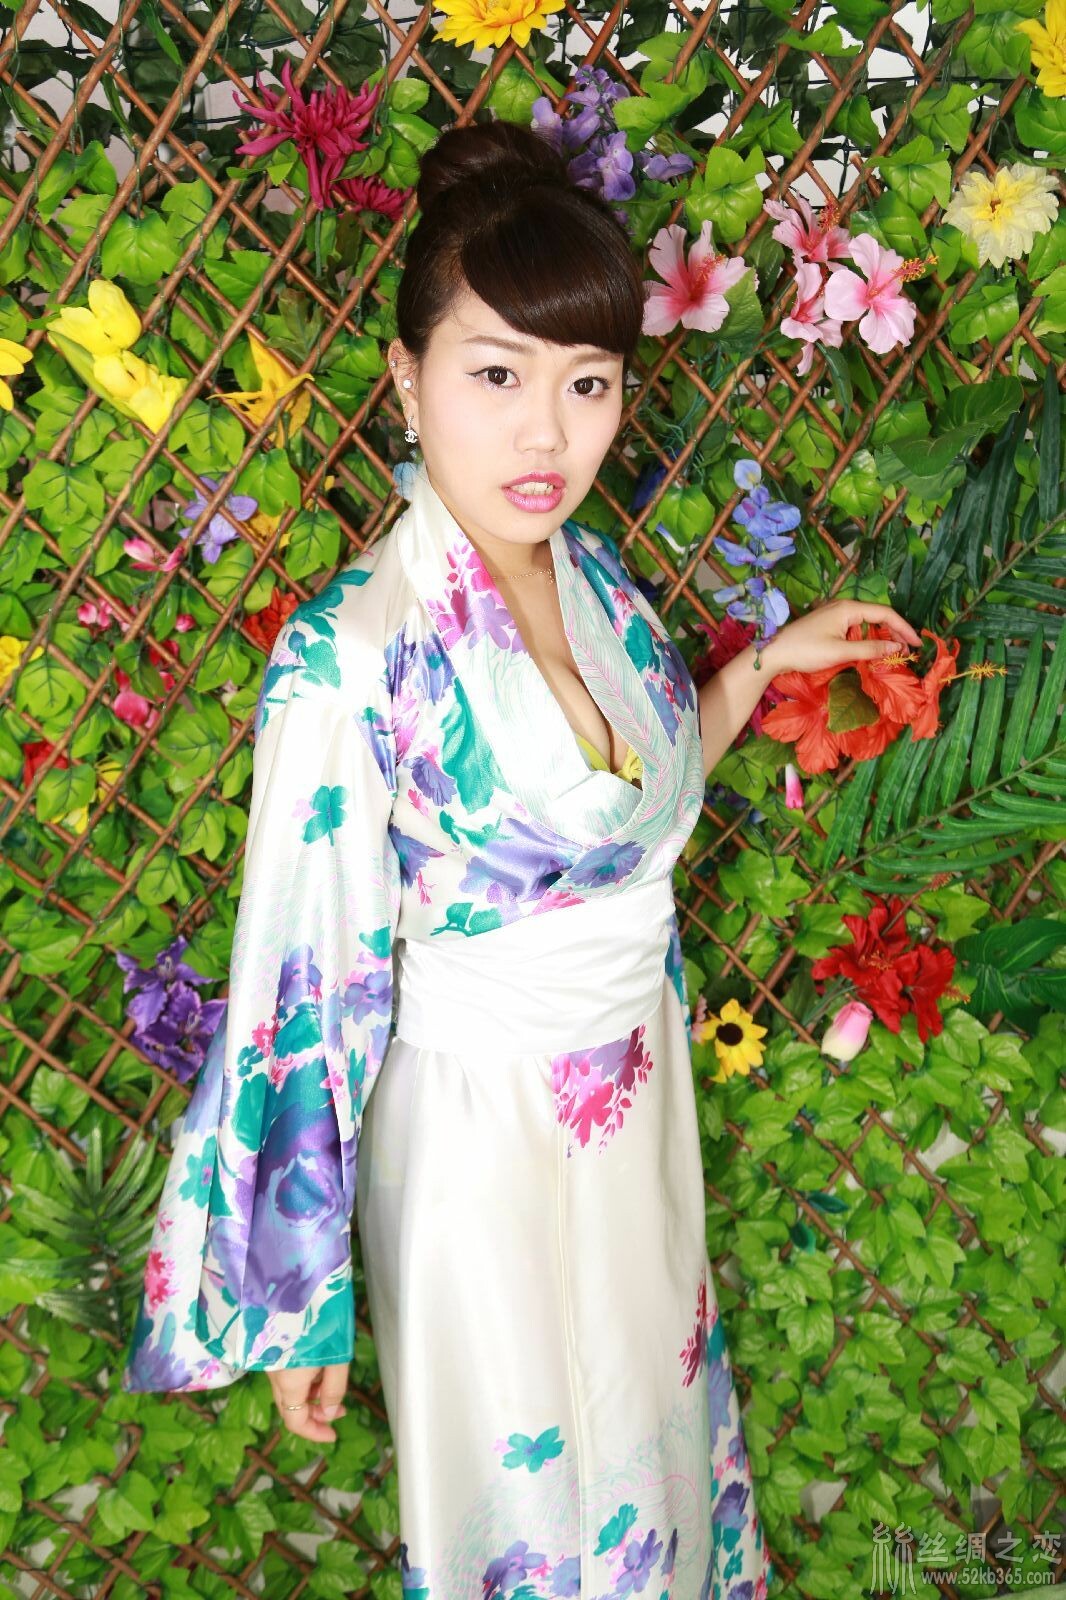 52kb 丝绸和服 seina-kimono-31.jpg  丝绸物品爱好者 234106x41t2thuh823hzyt